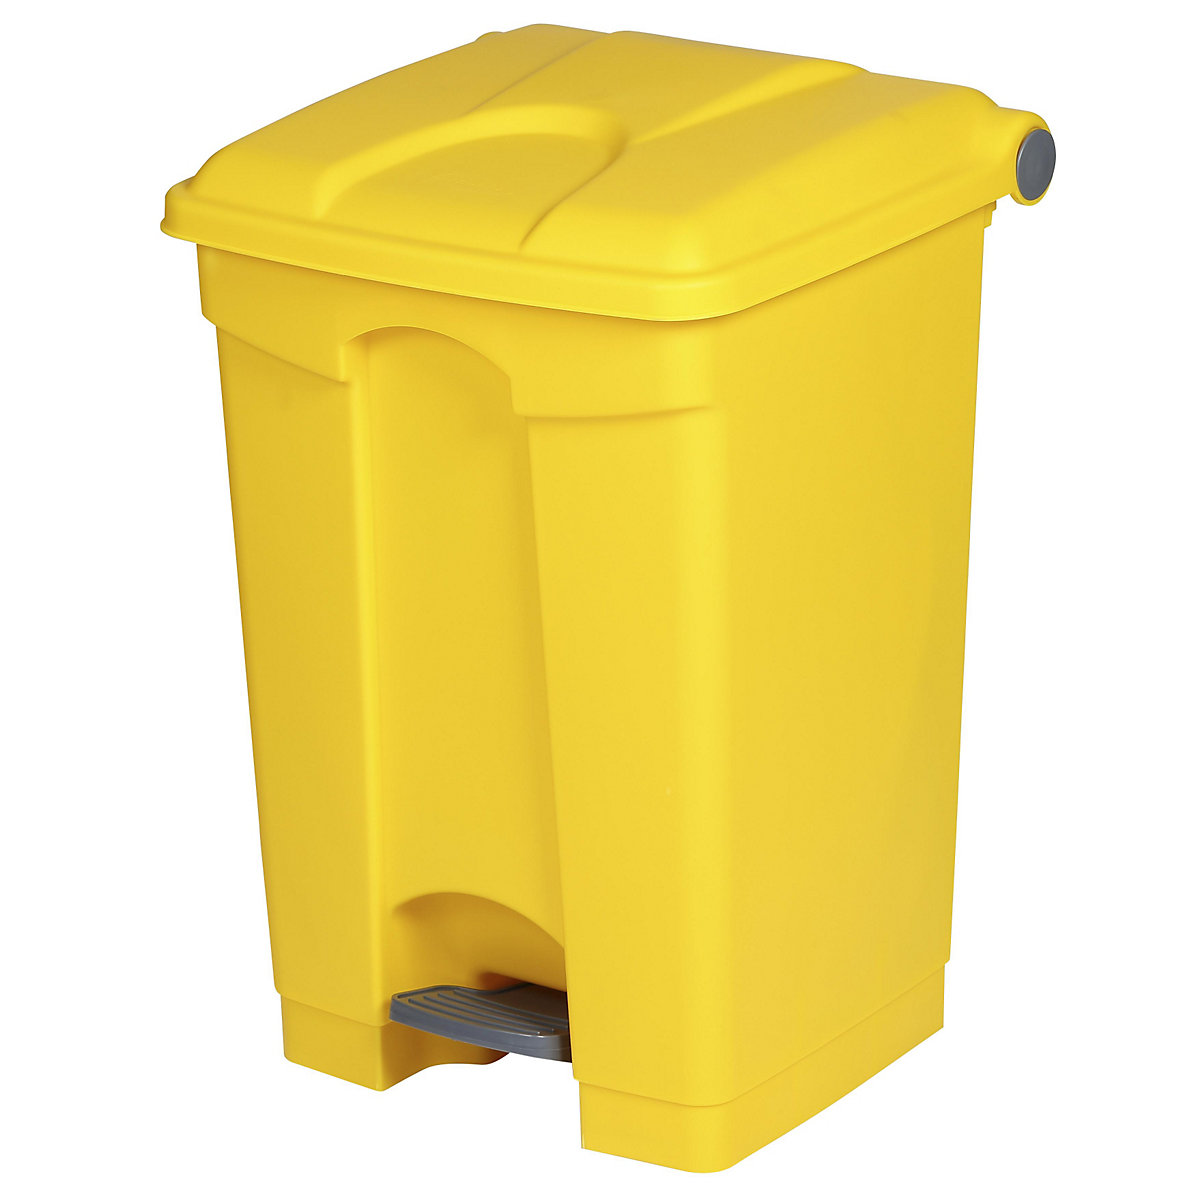 Spremnik za otpad s papučicom, volumen 45 l, ŠxVxD 410 x 600 x 400 mm, u žutoj boji-16